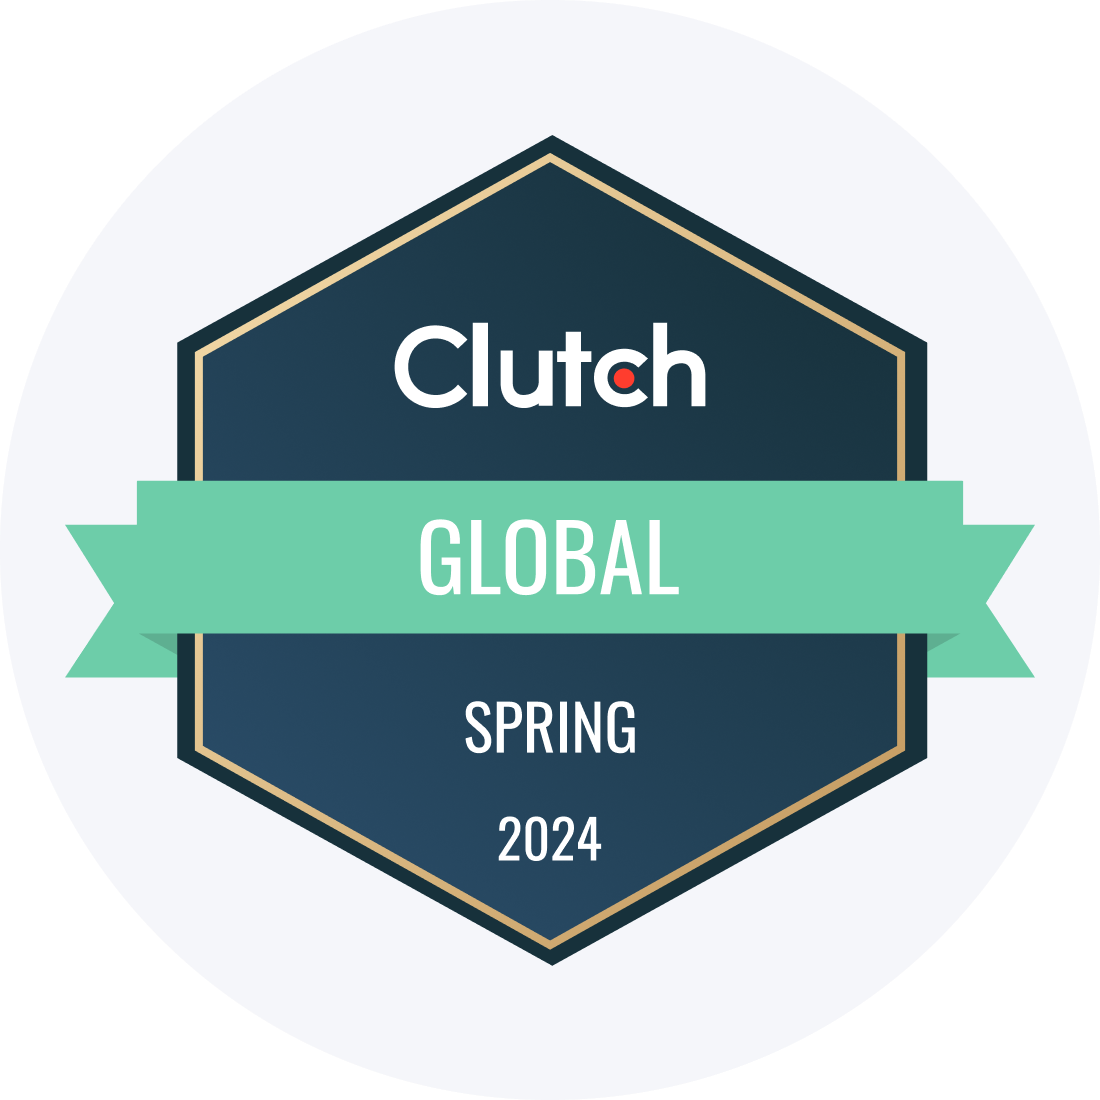 clutch_global_spring_2024